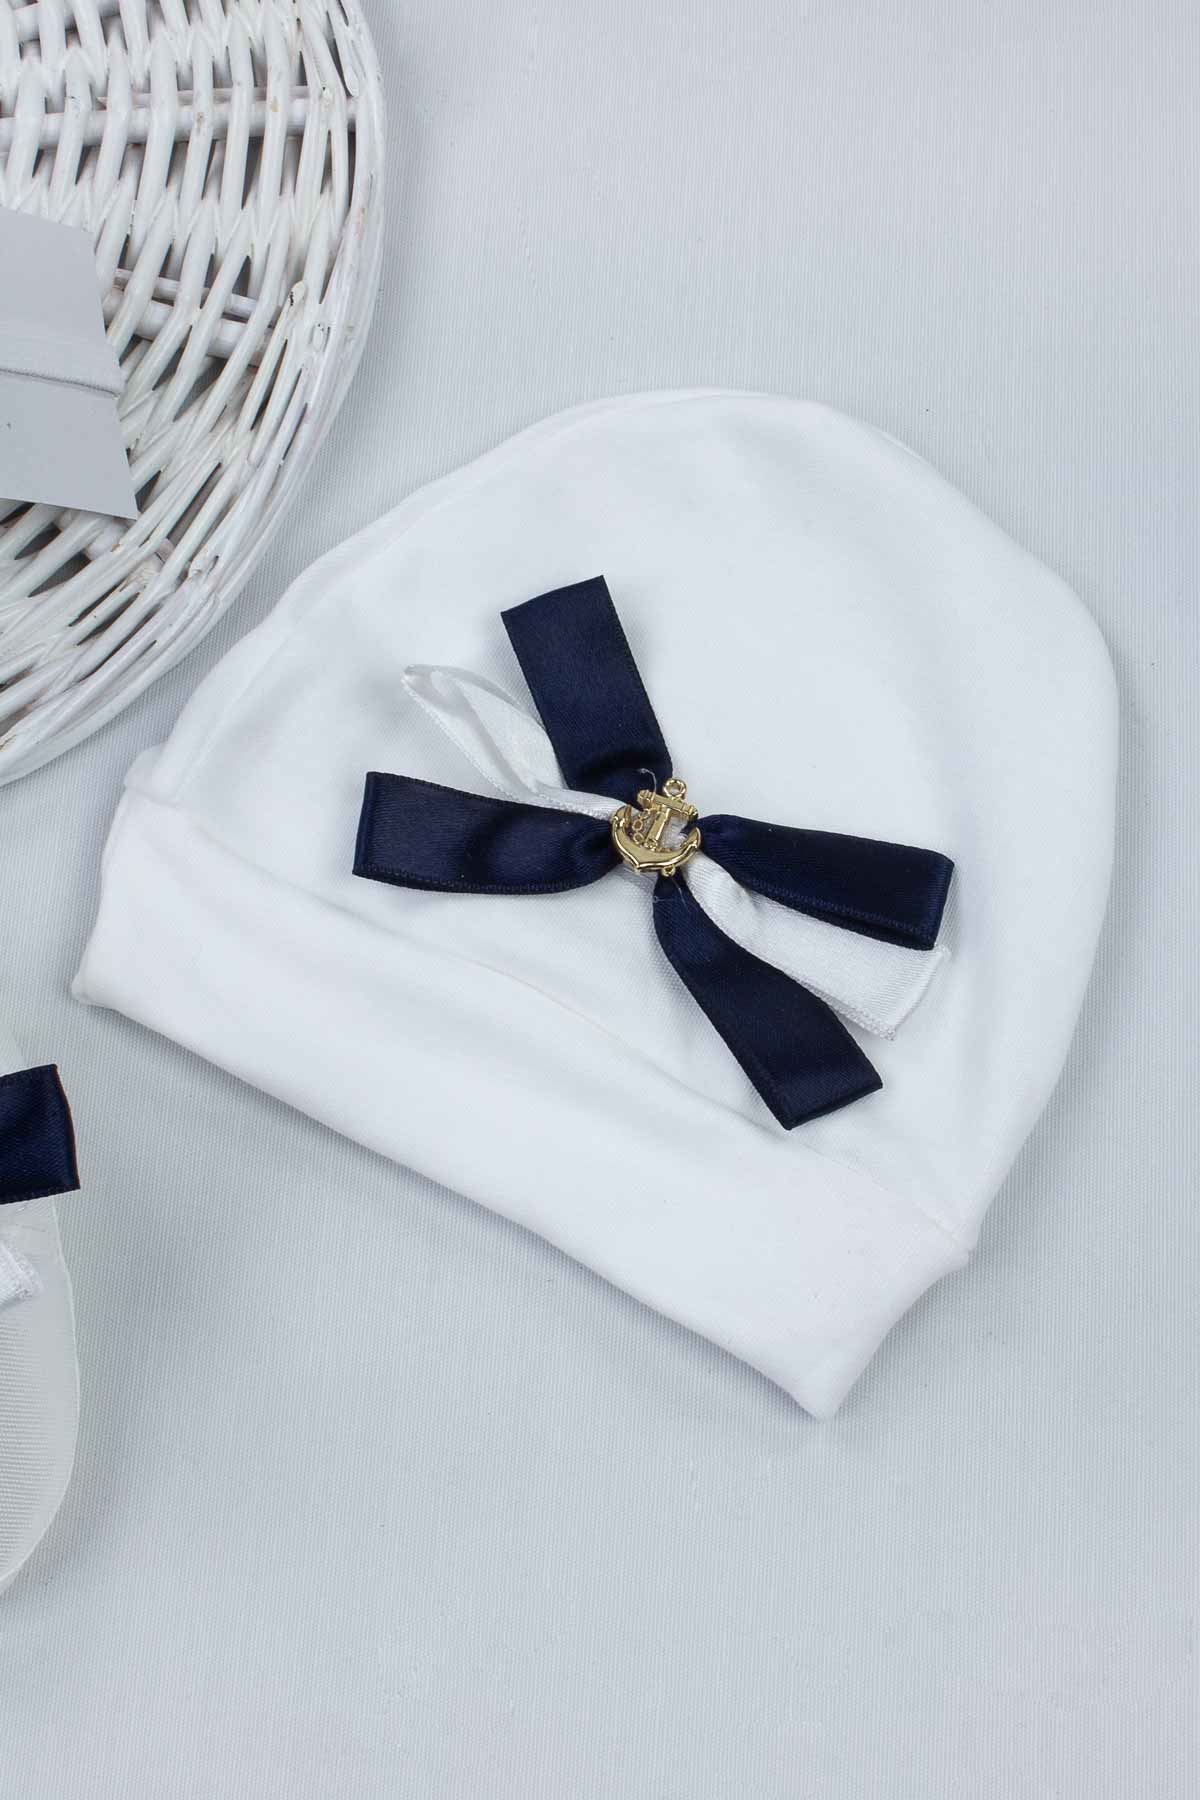 Navy blue Male Baby 3 pcs Gift Hat Bowtie Shoes Set